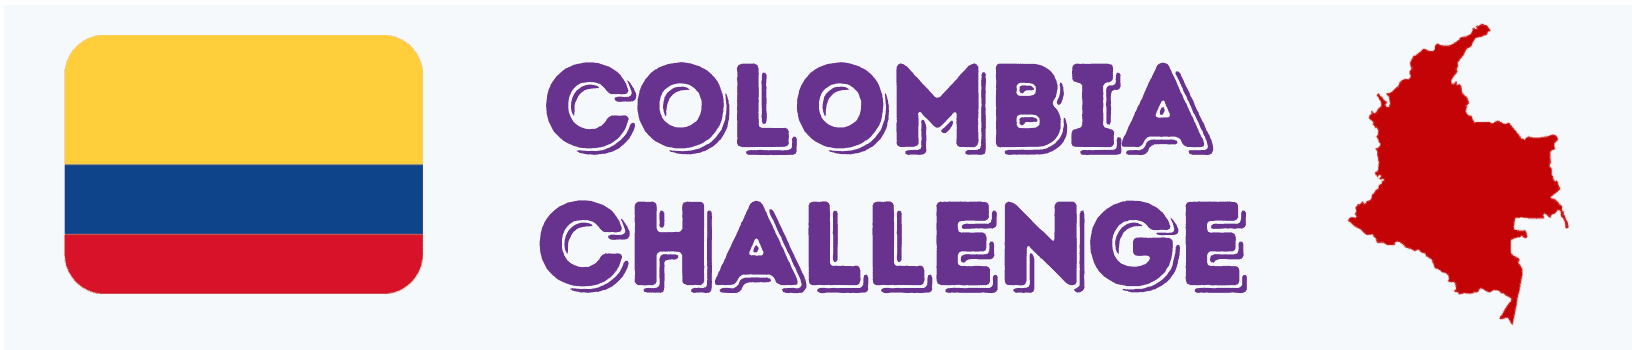 Colombia-for-kids-challenge-activities